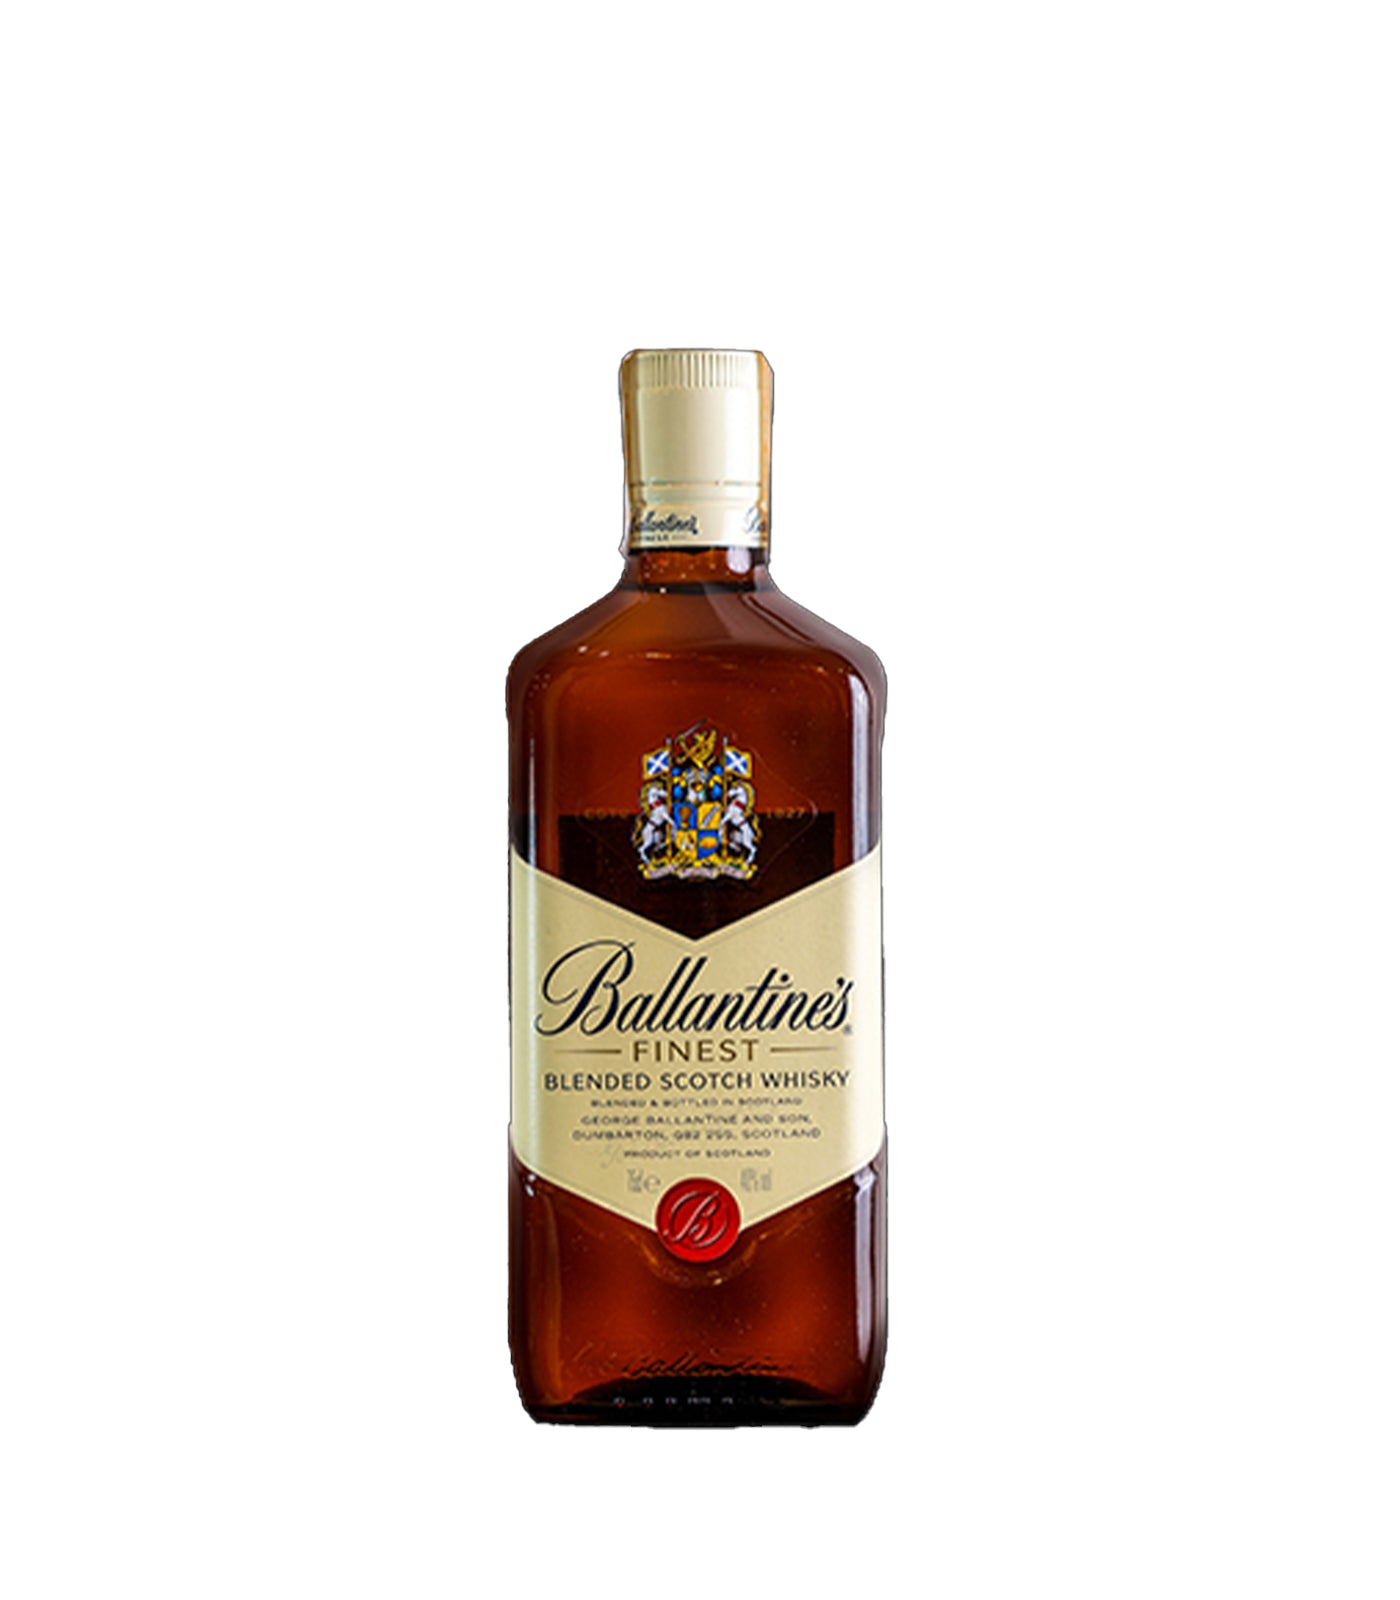 Ballantine's Blended Scotch Whisky